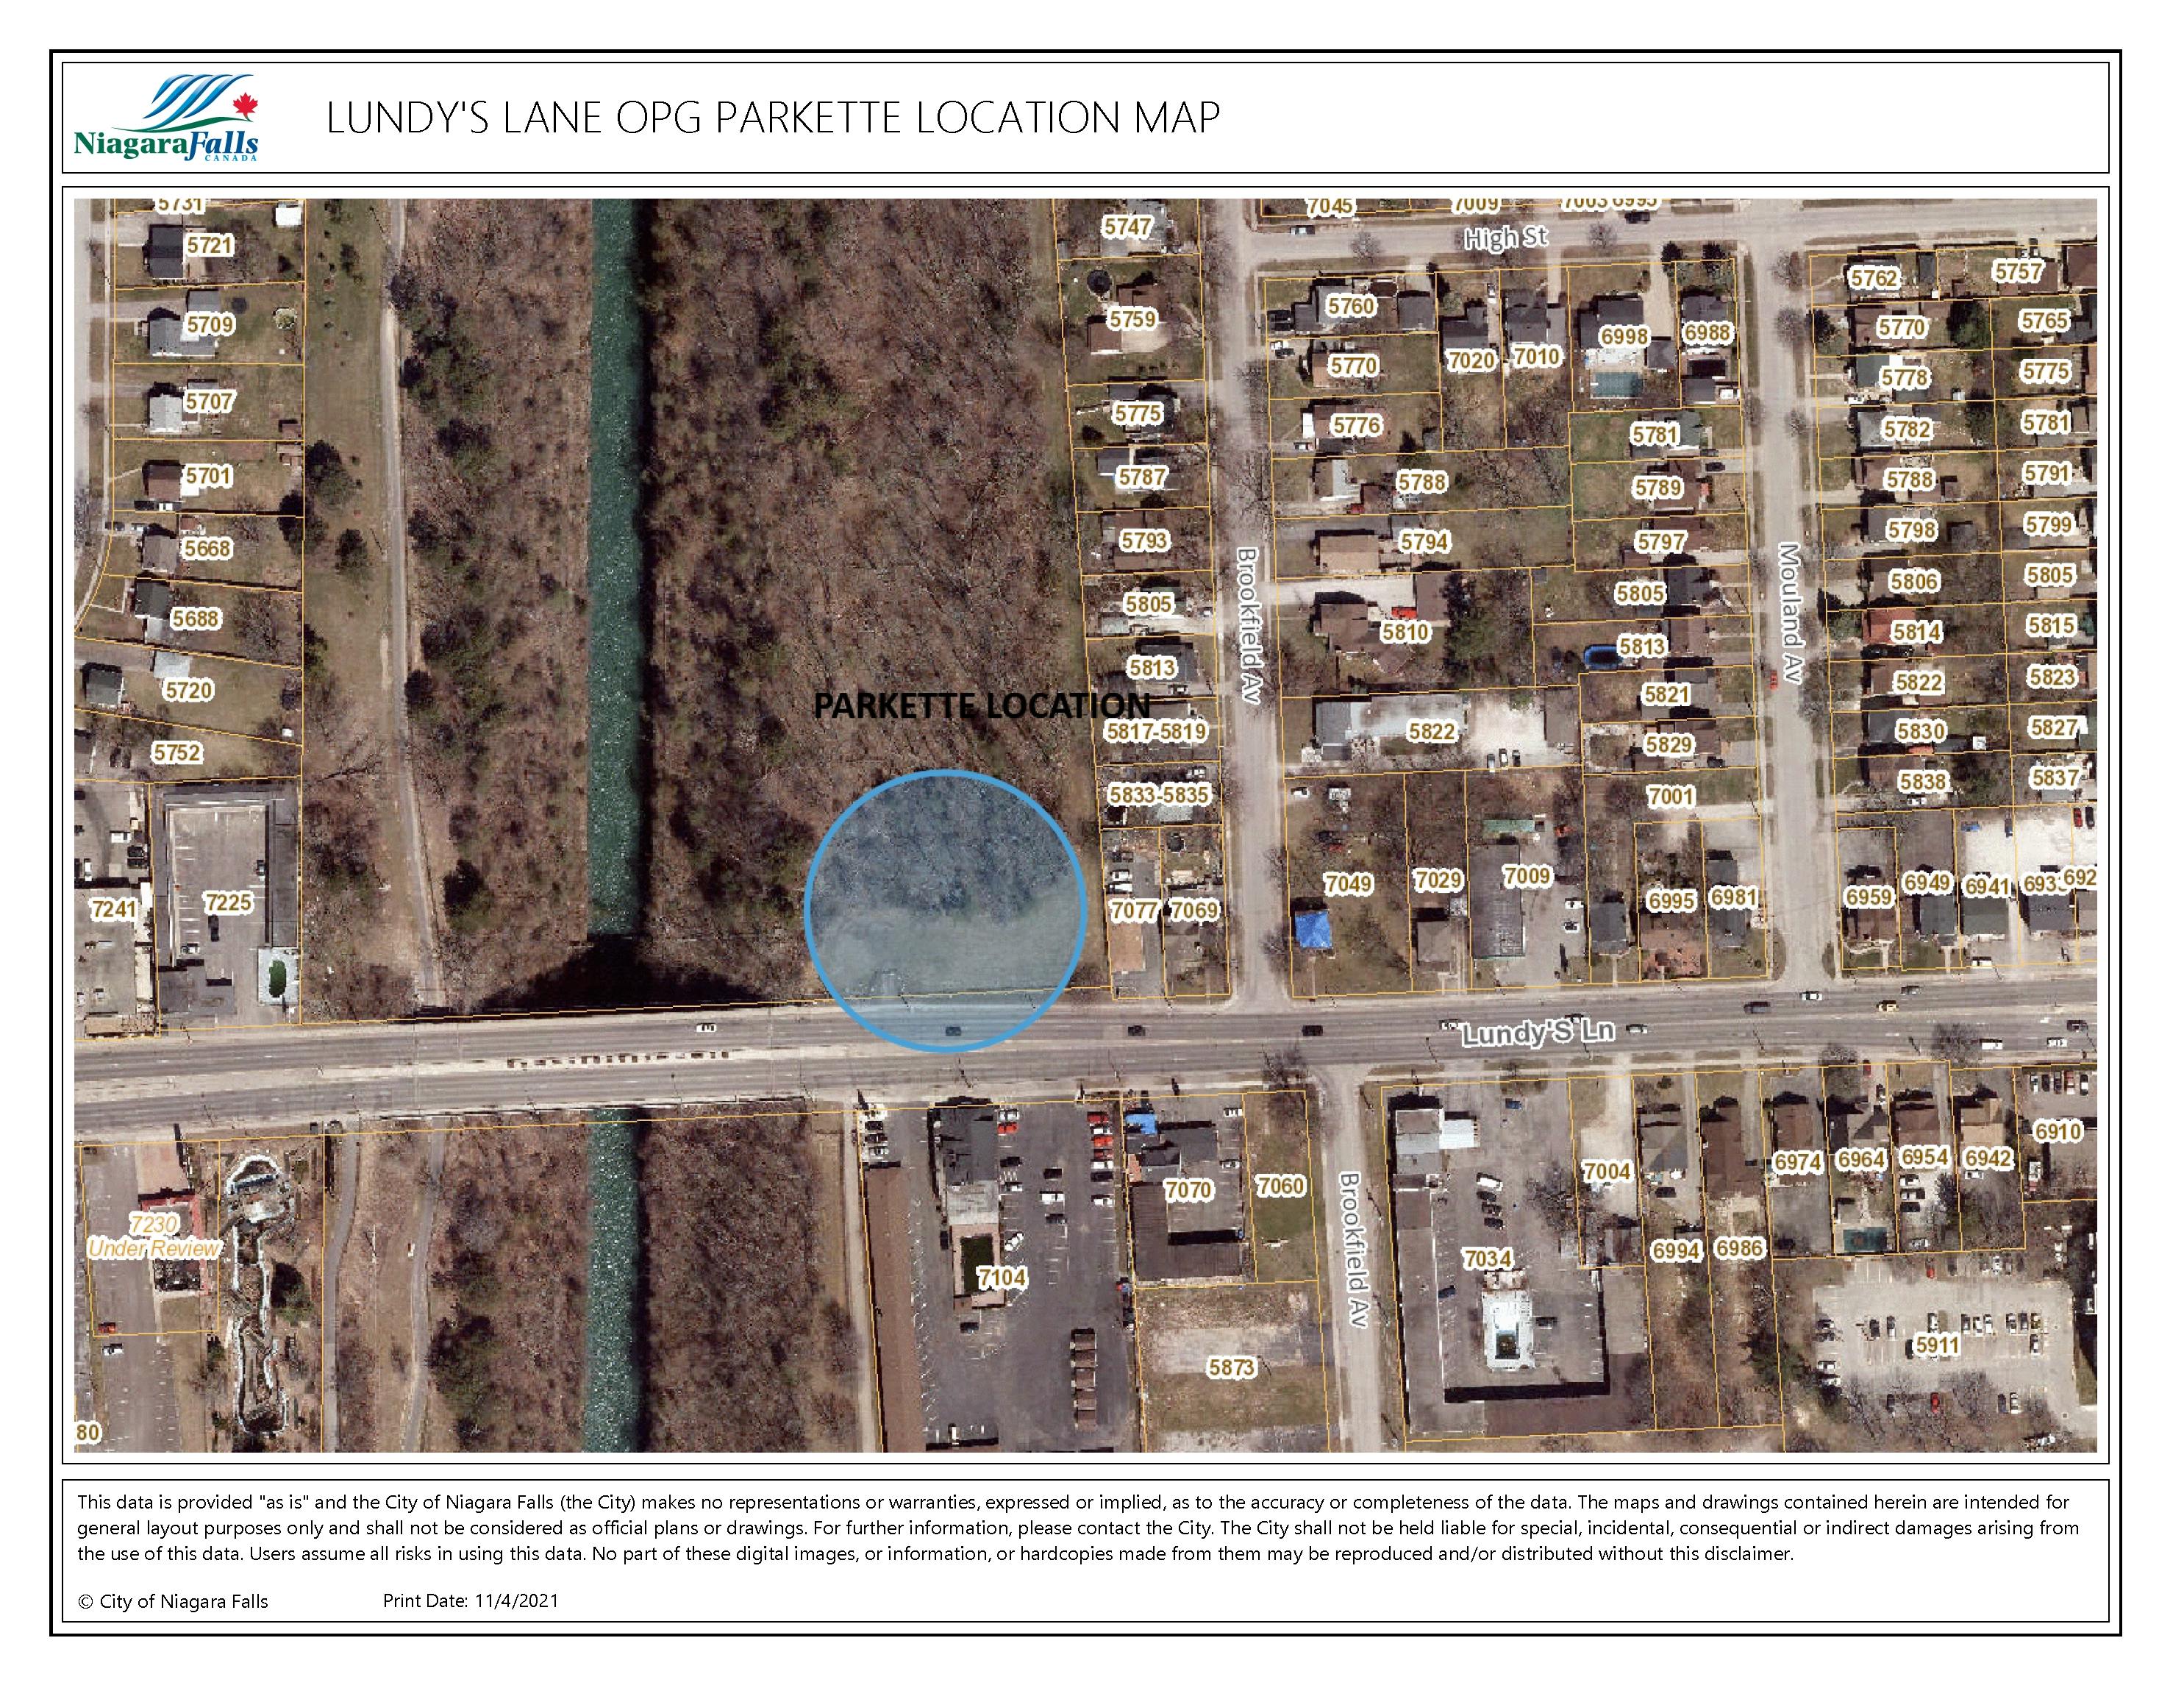 Lundy's Lane OPG Parkette Location Map